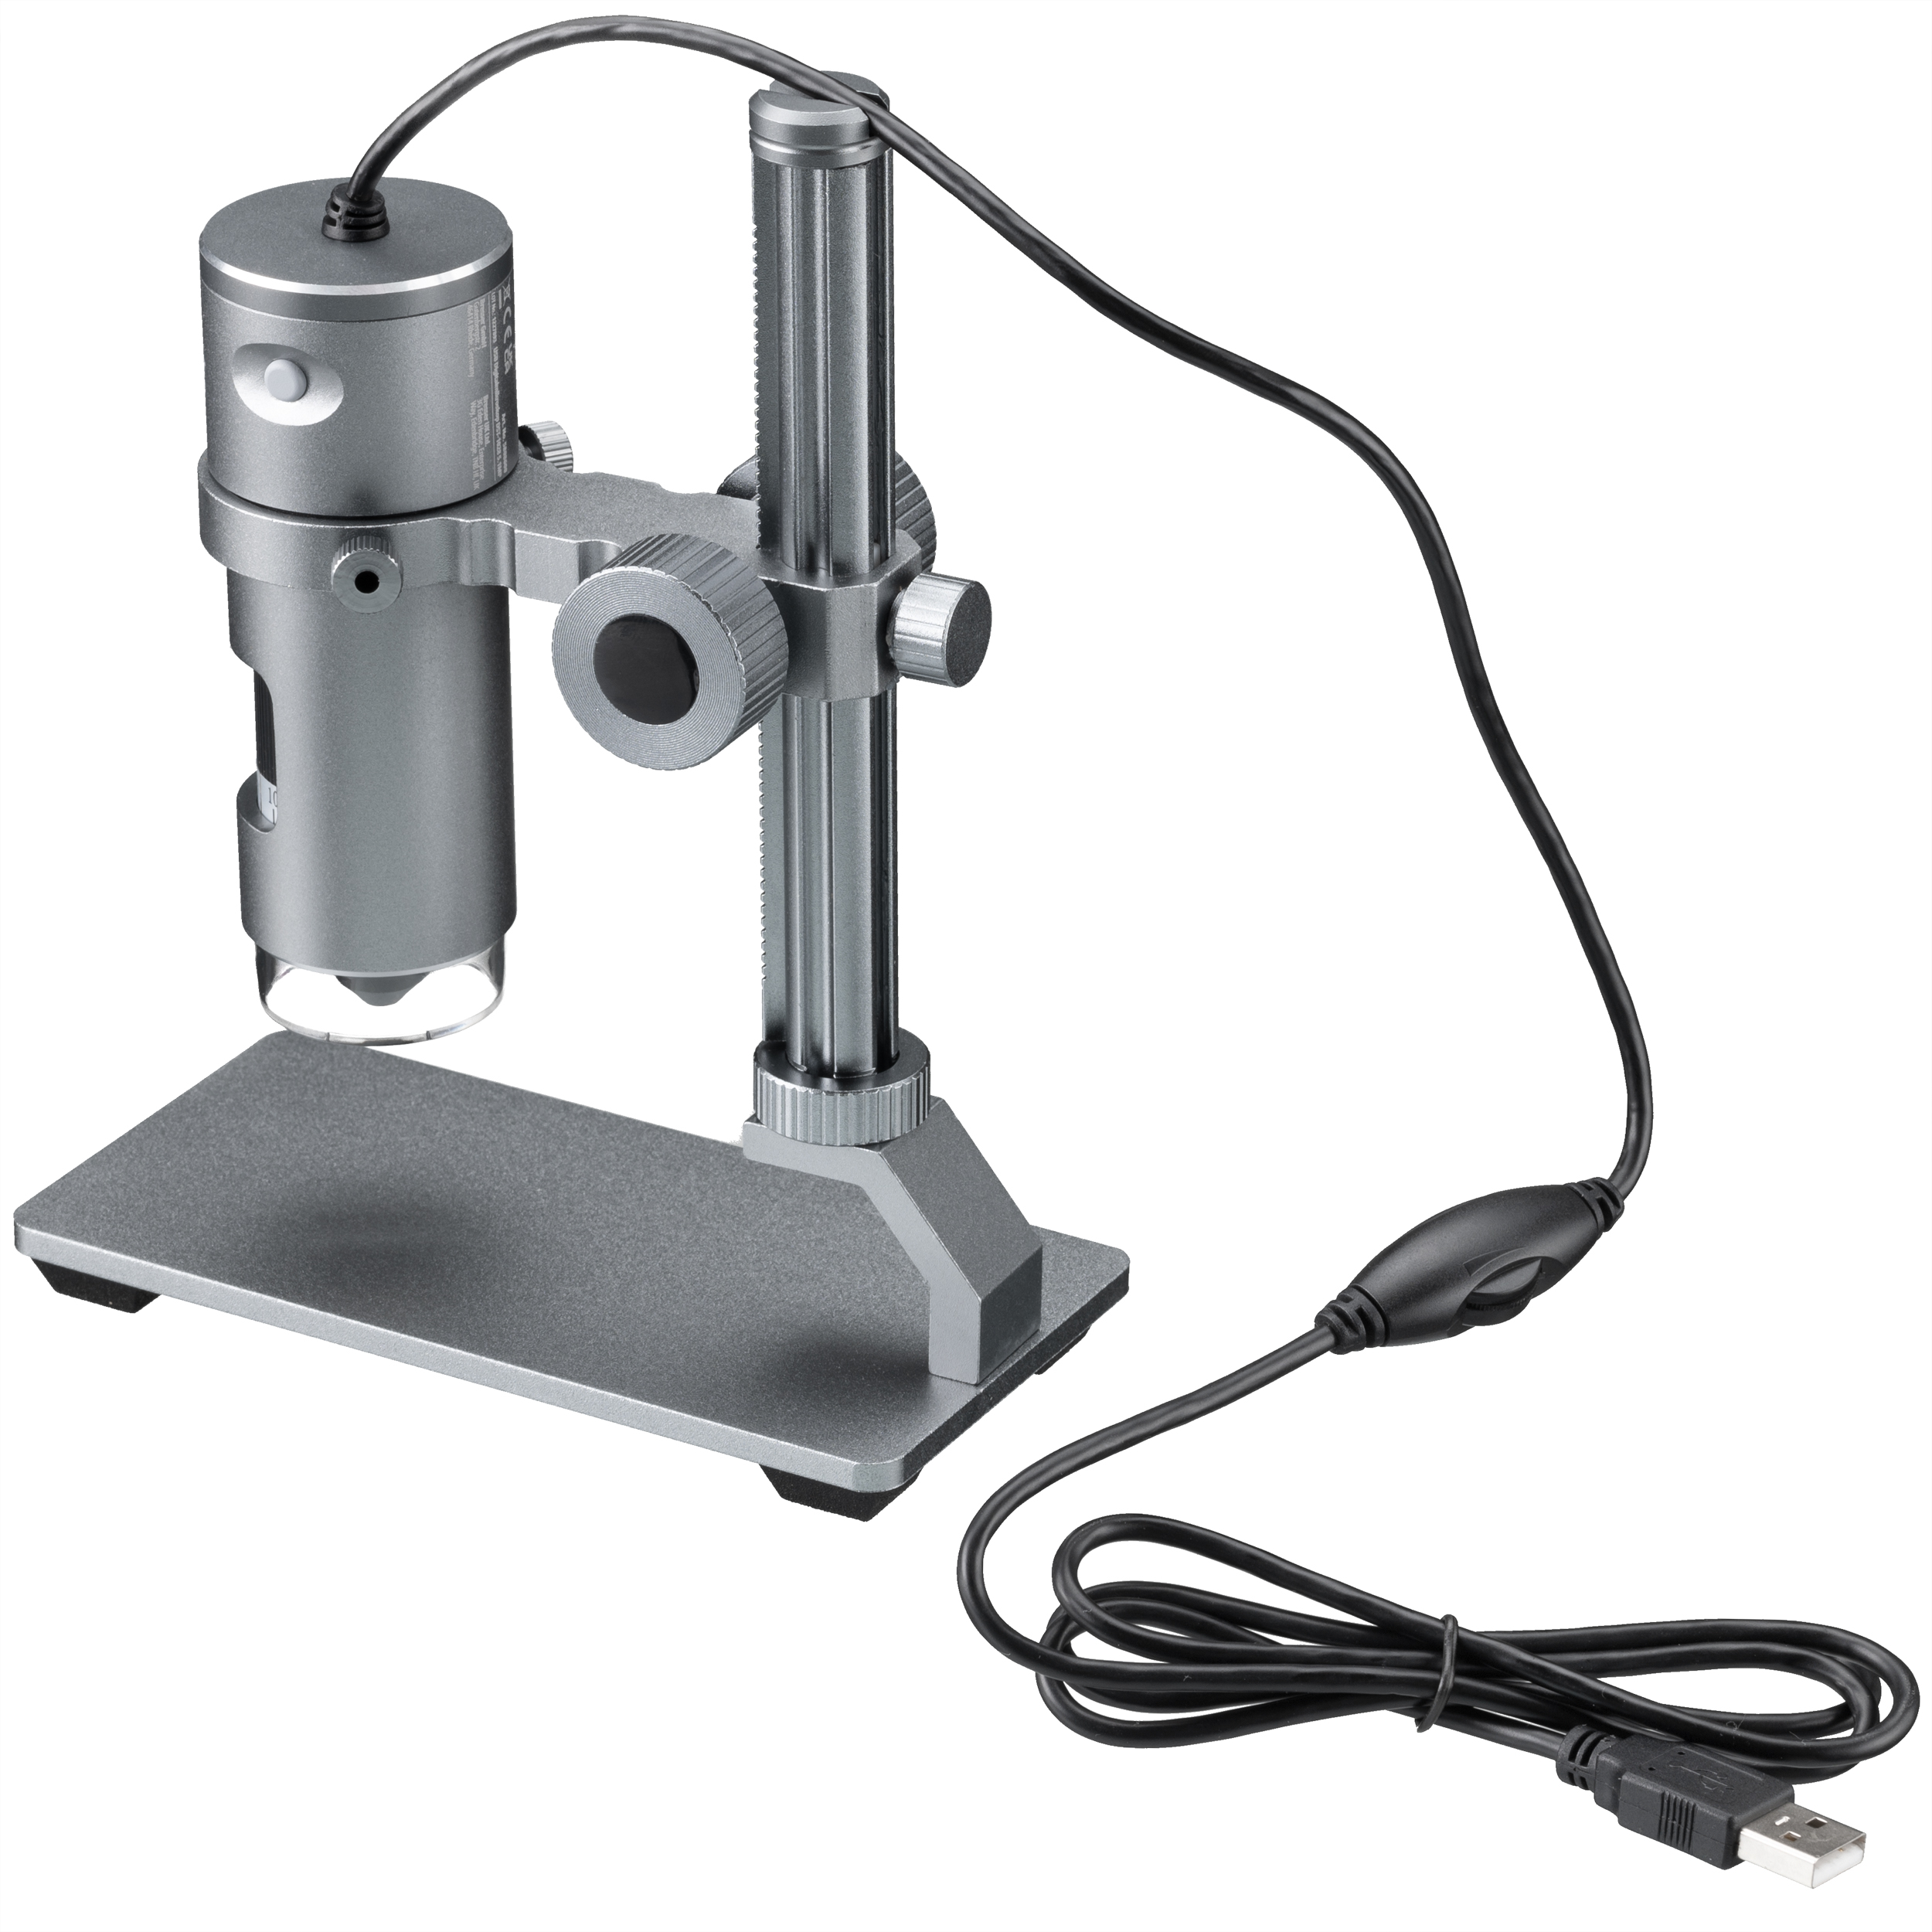 BRESSER USB-Digitalmikroskop DST-1028 5MP